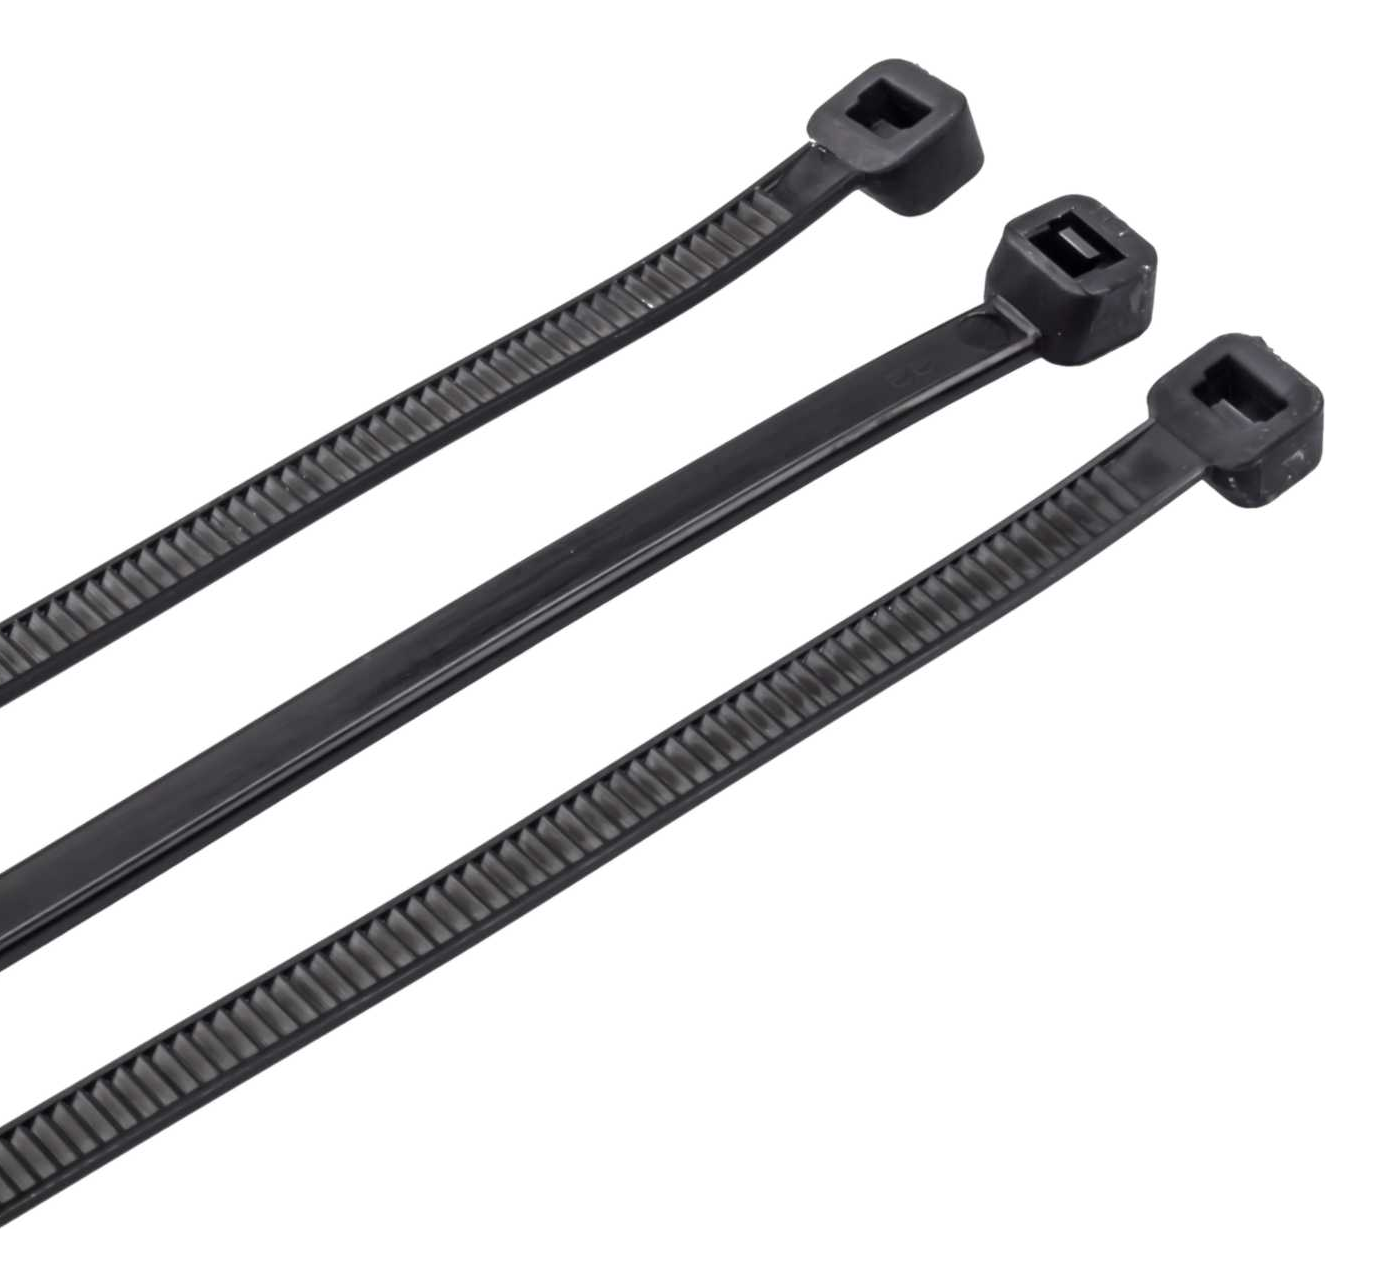 Cable Tie Black 370x4.8mm